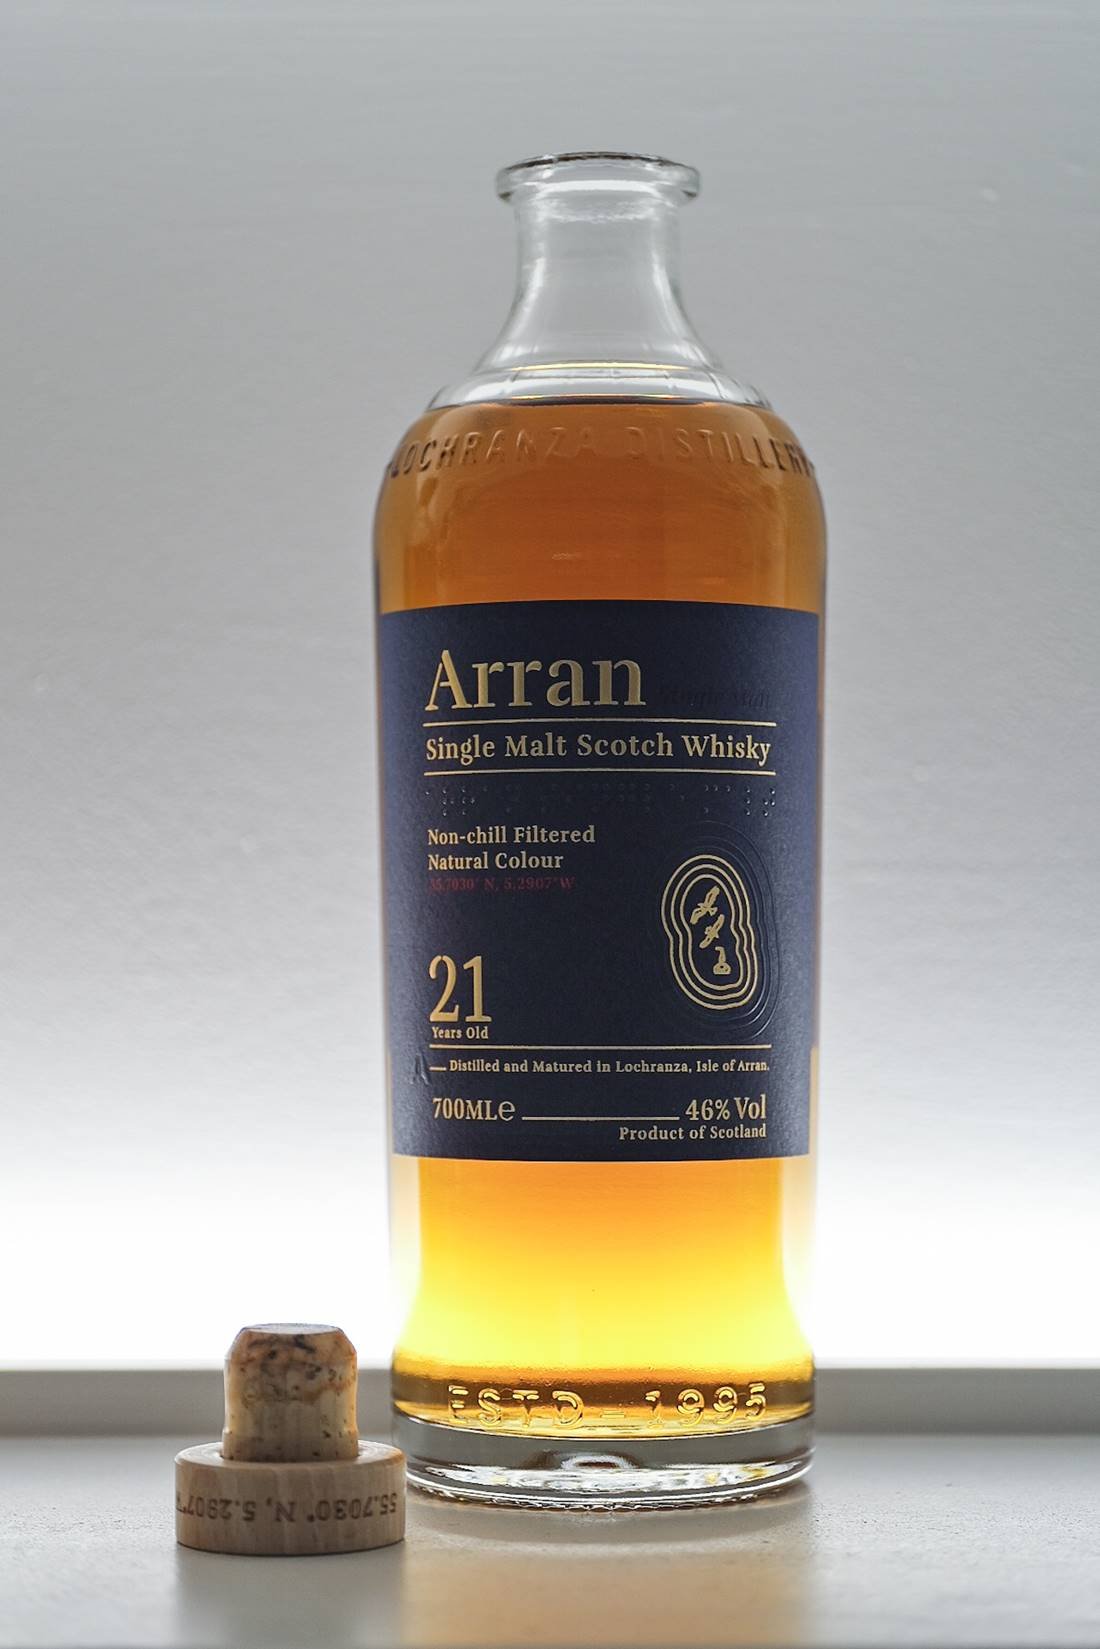 Arran 21 Years Old Single Malt Scotch Whisky 700ml